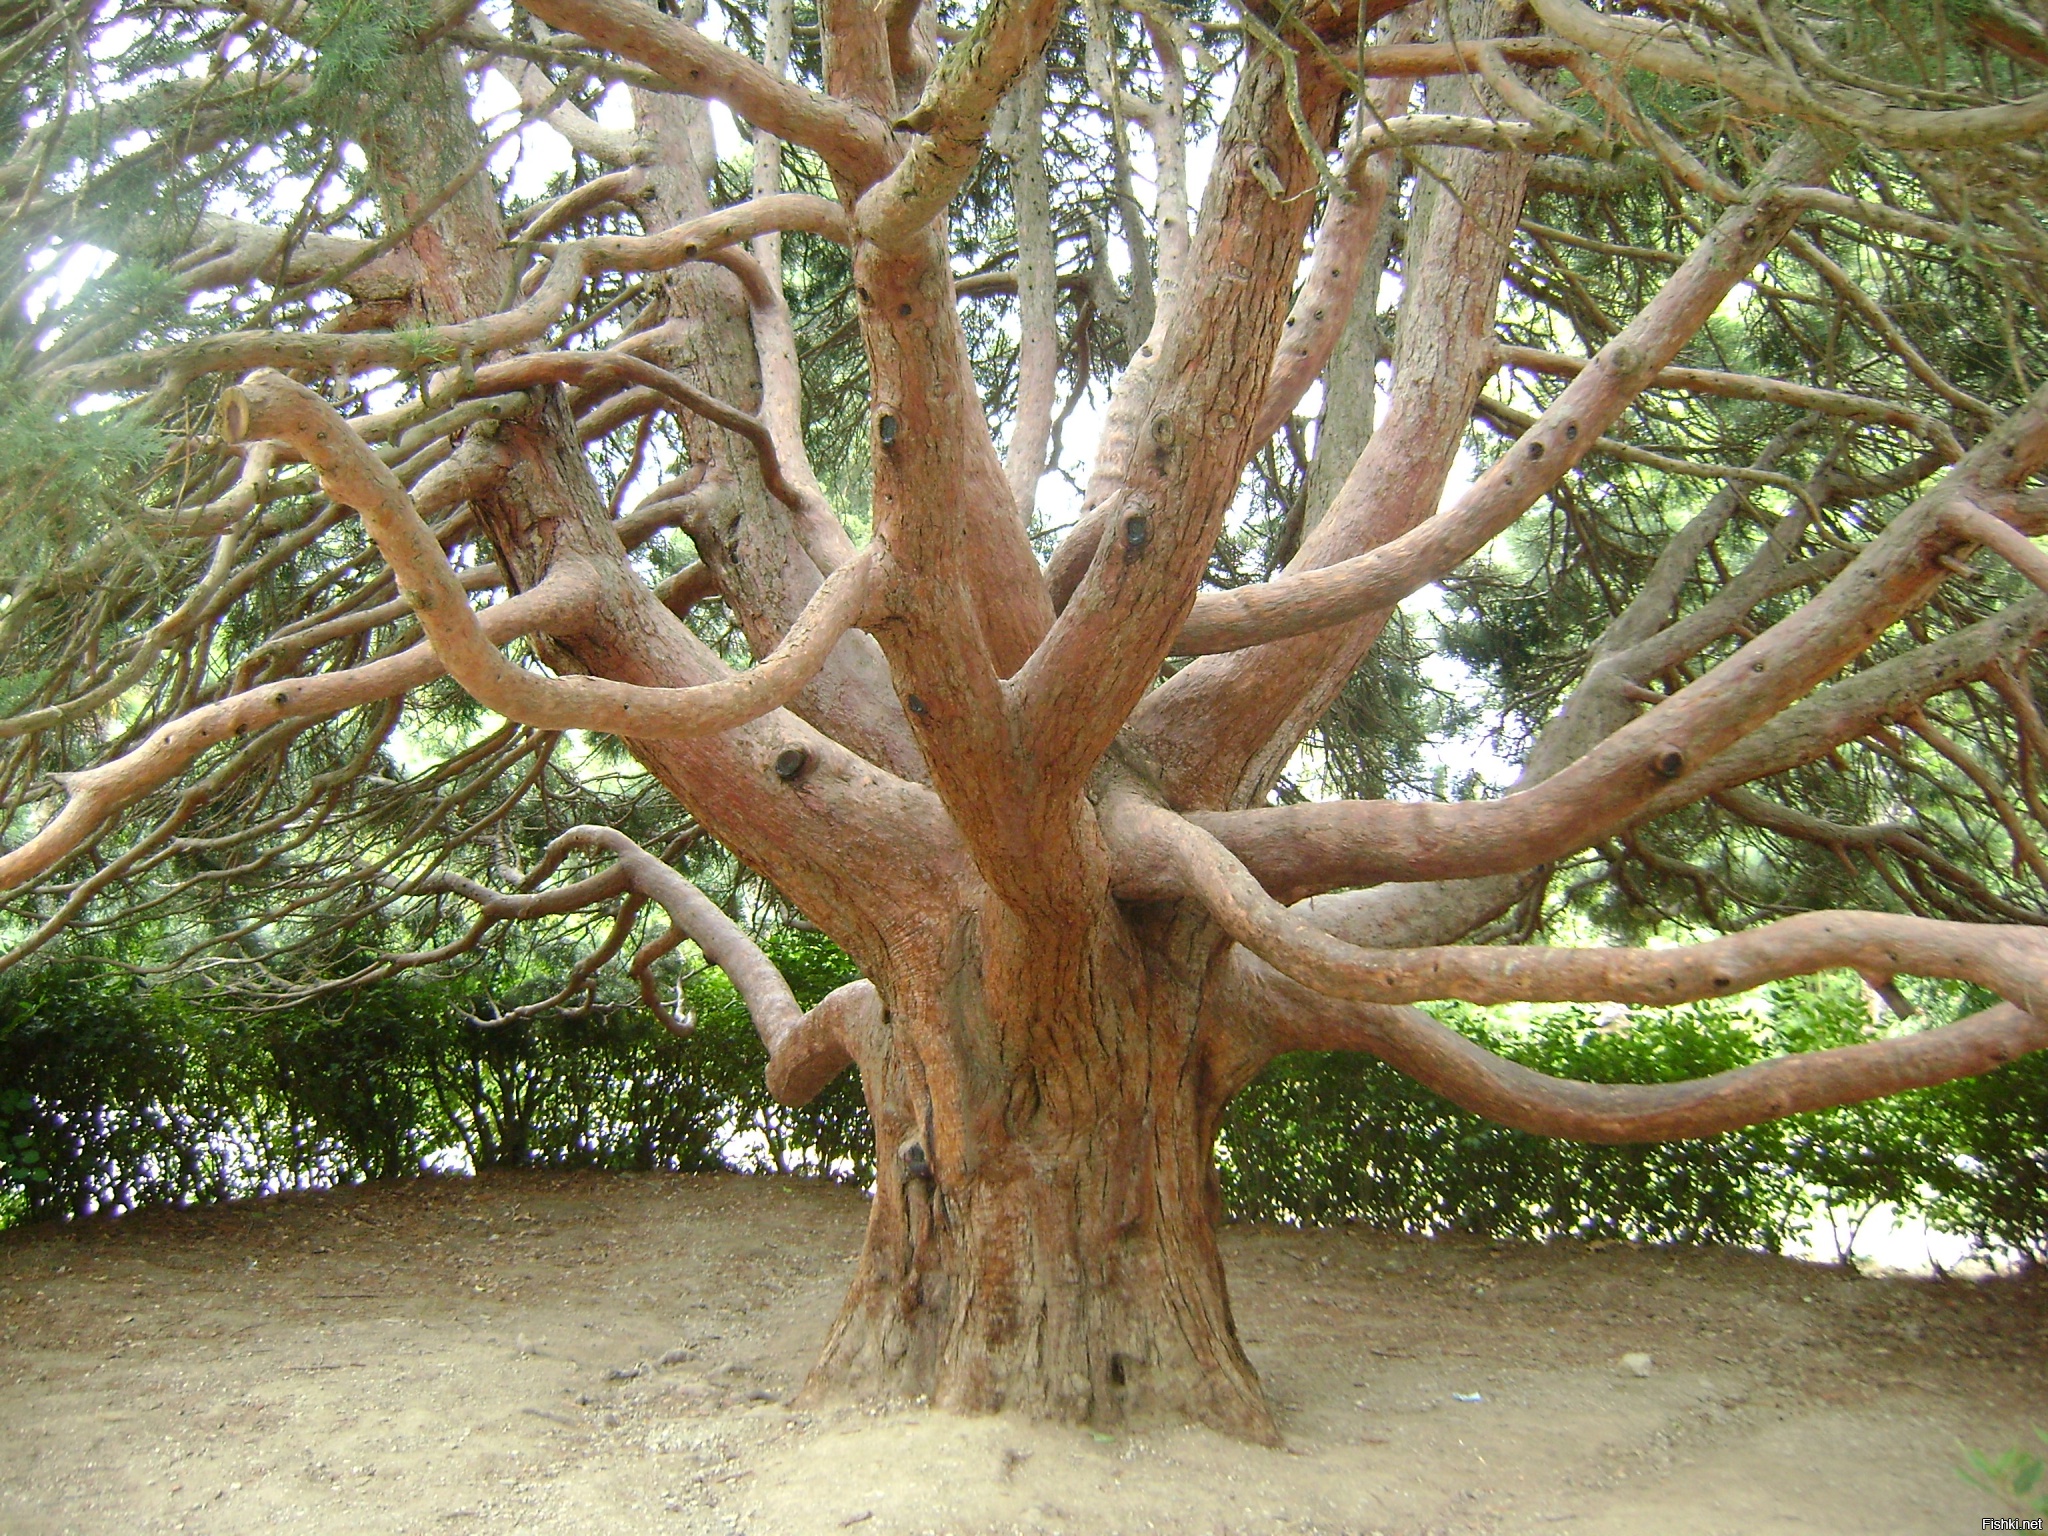 Узнать Дерево По Фото Онлайн